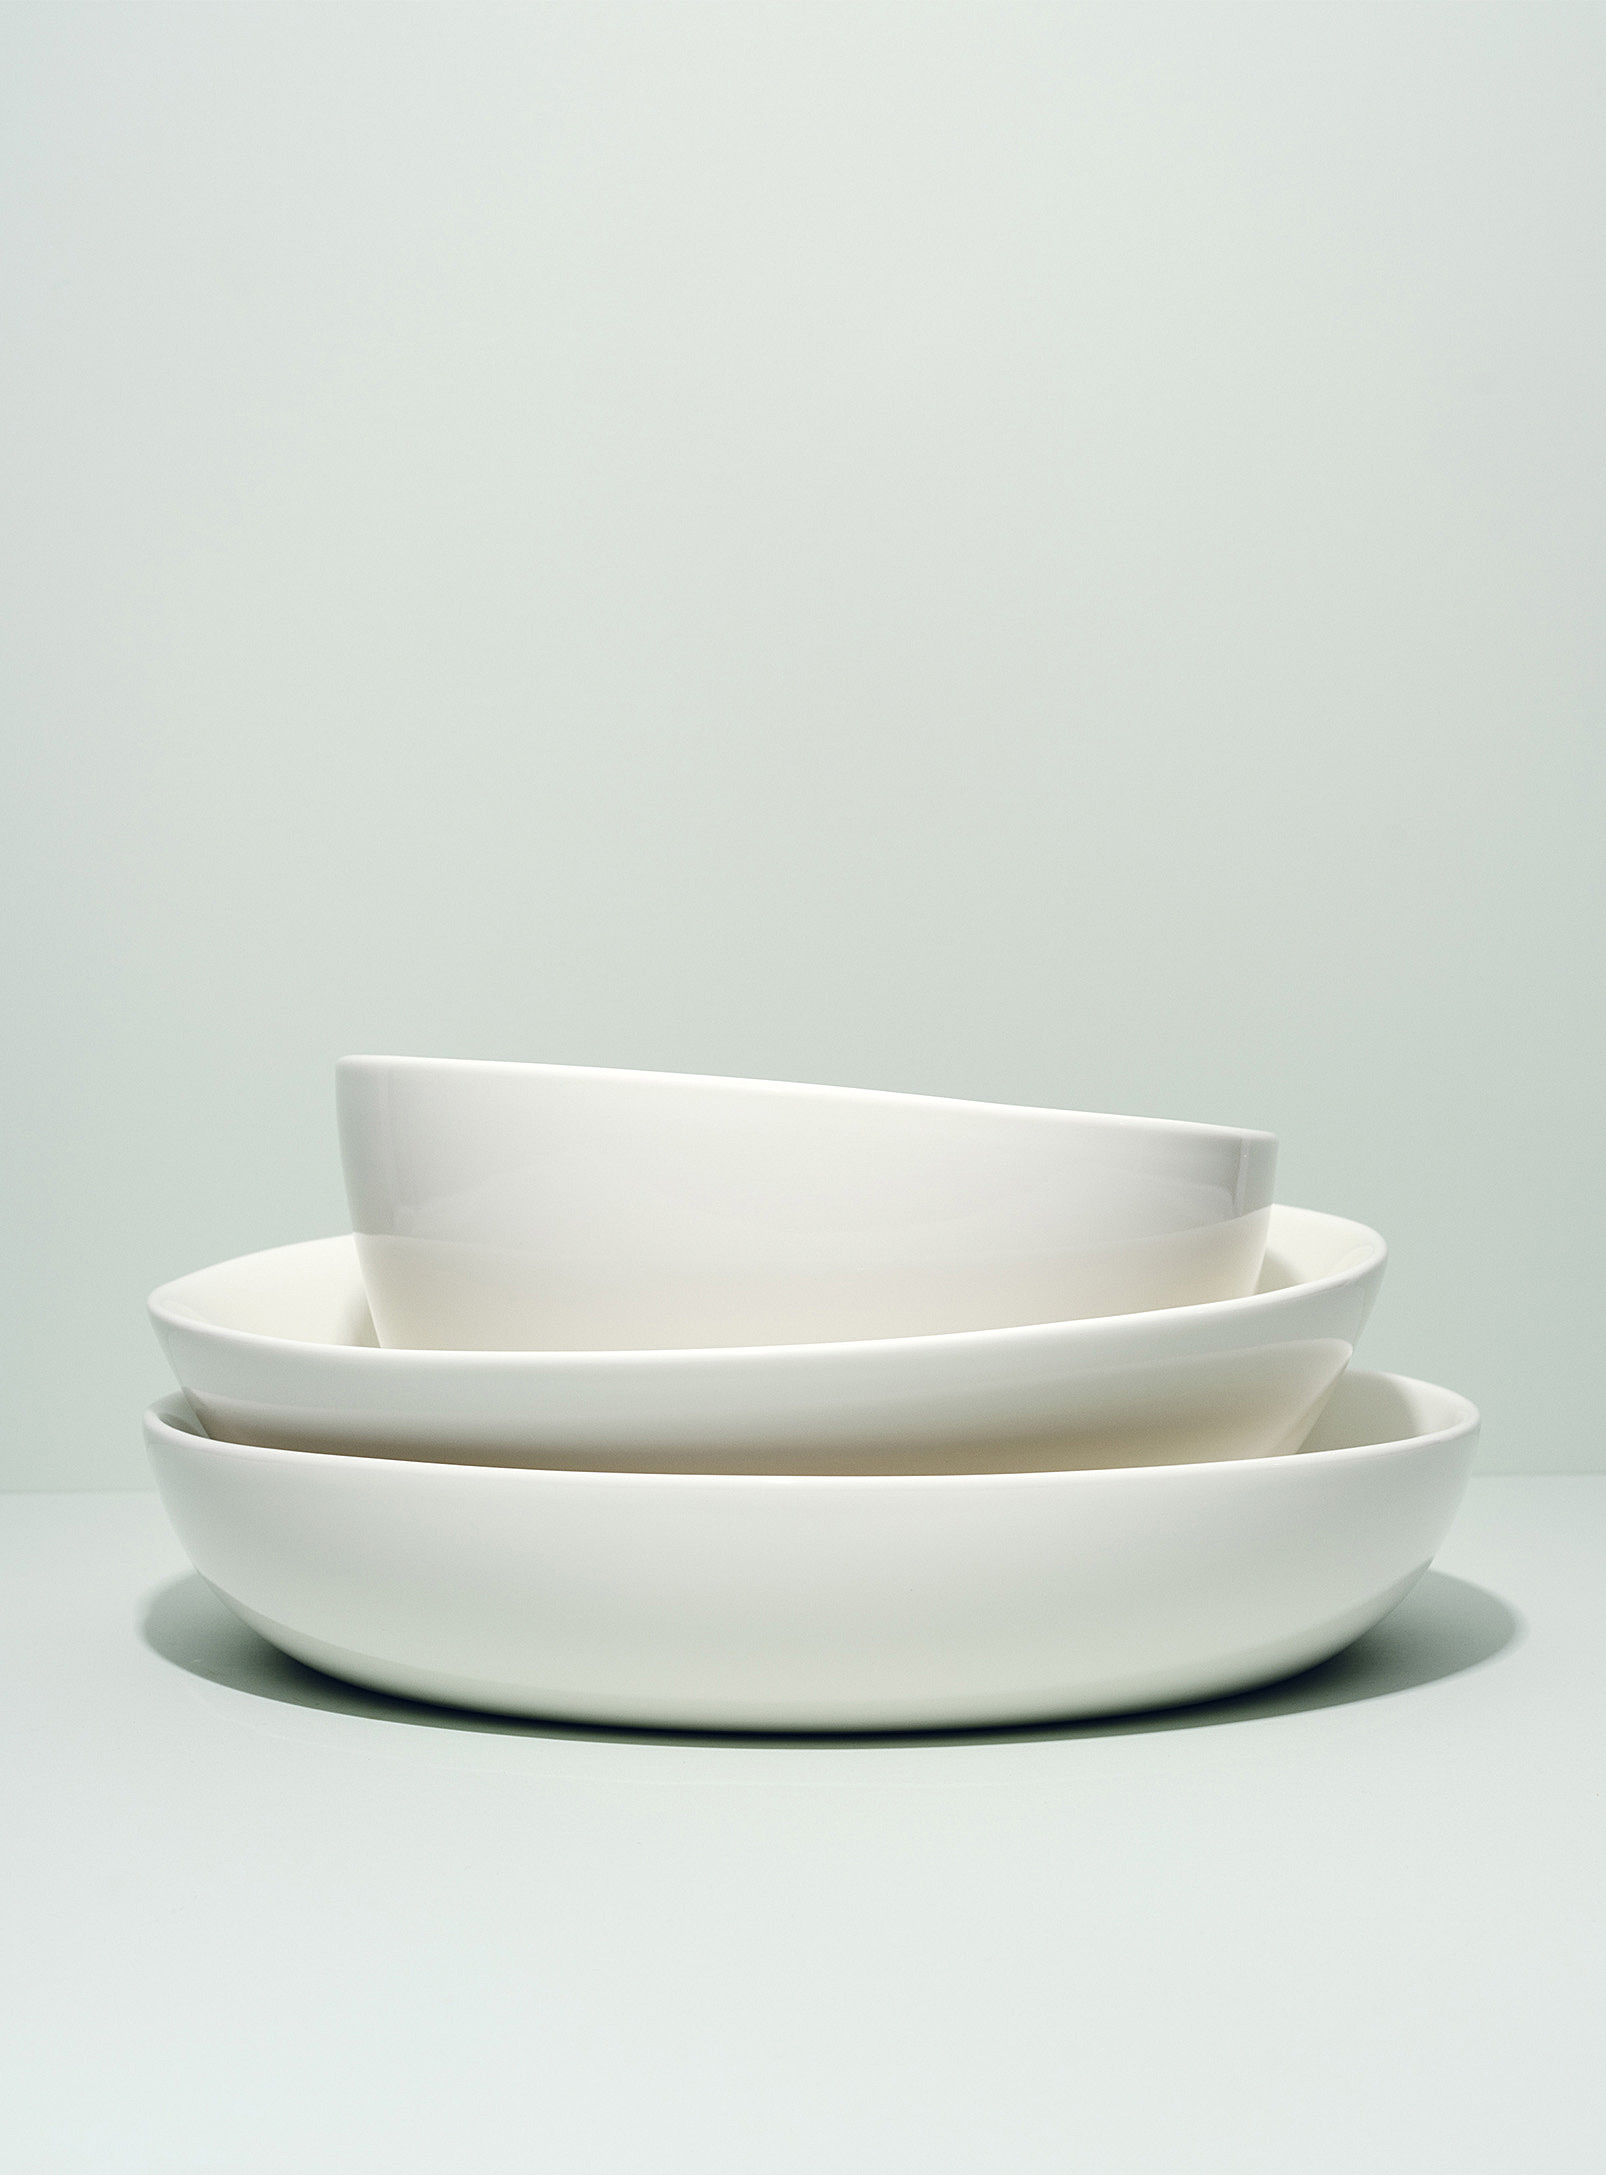 Fors Studio - New bone china serving bowl set 3-piece set